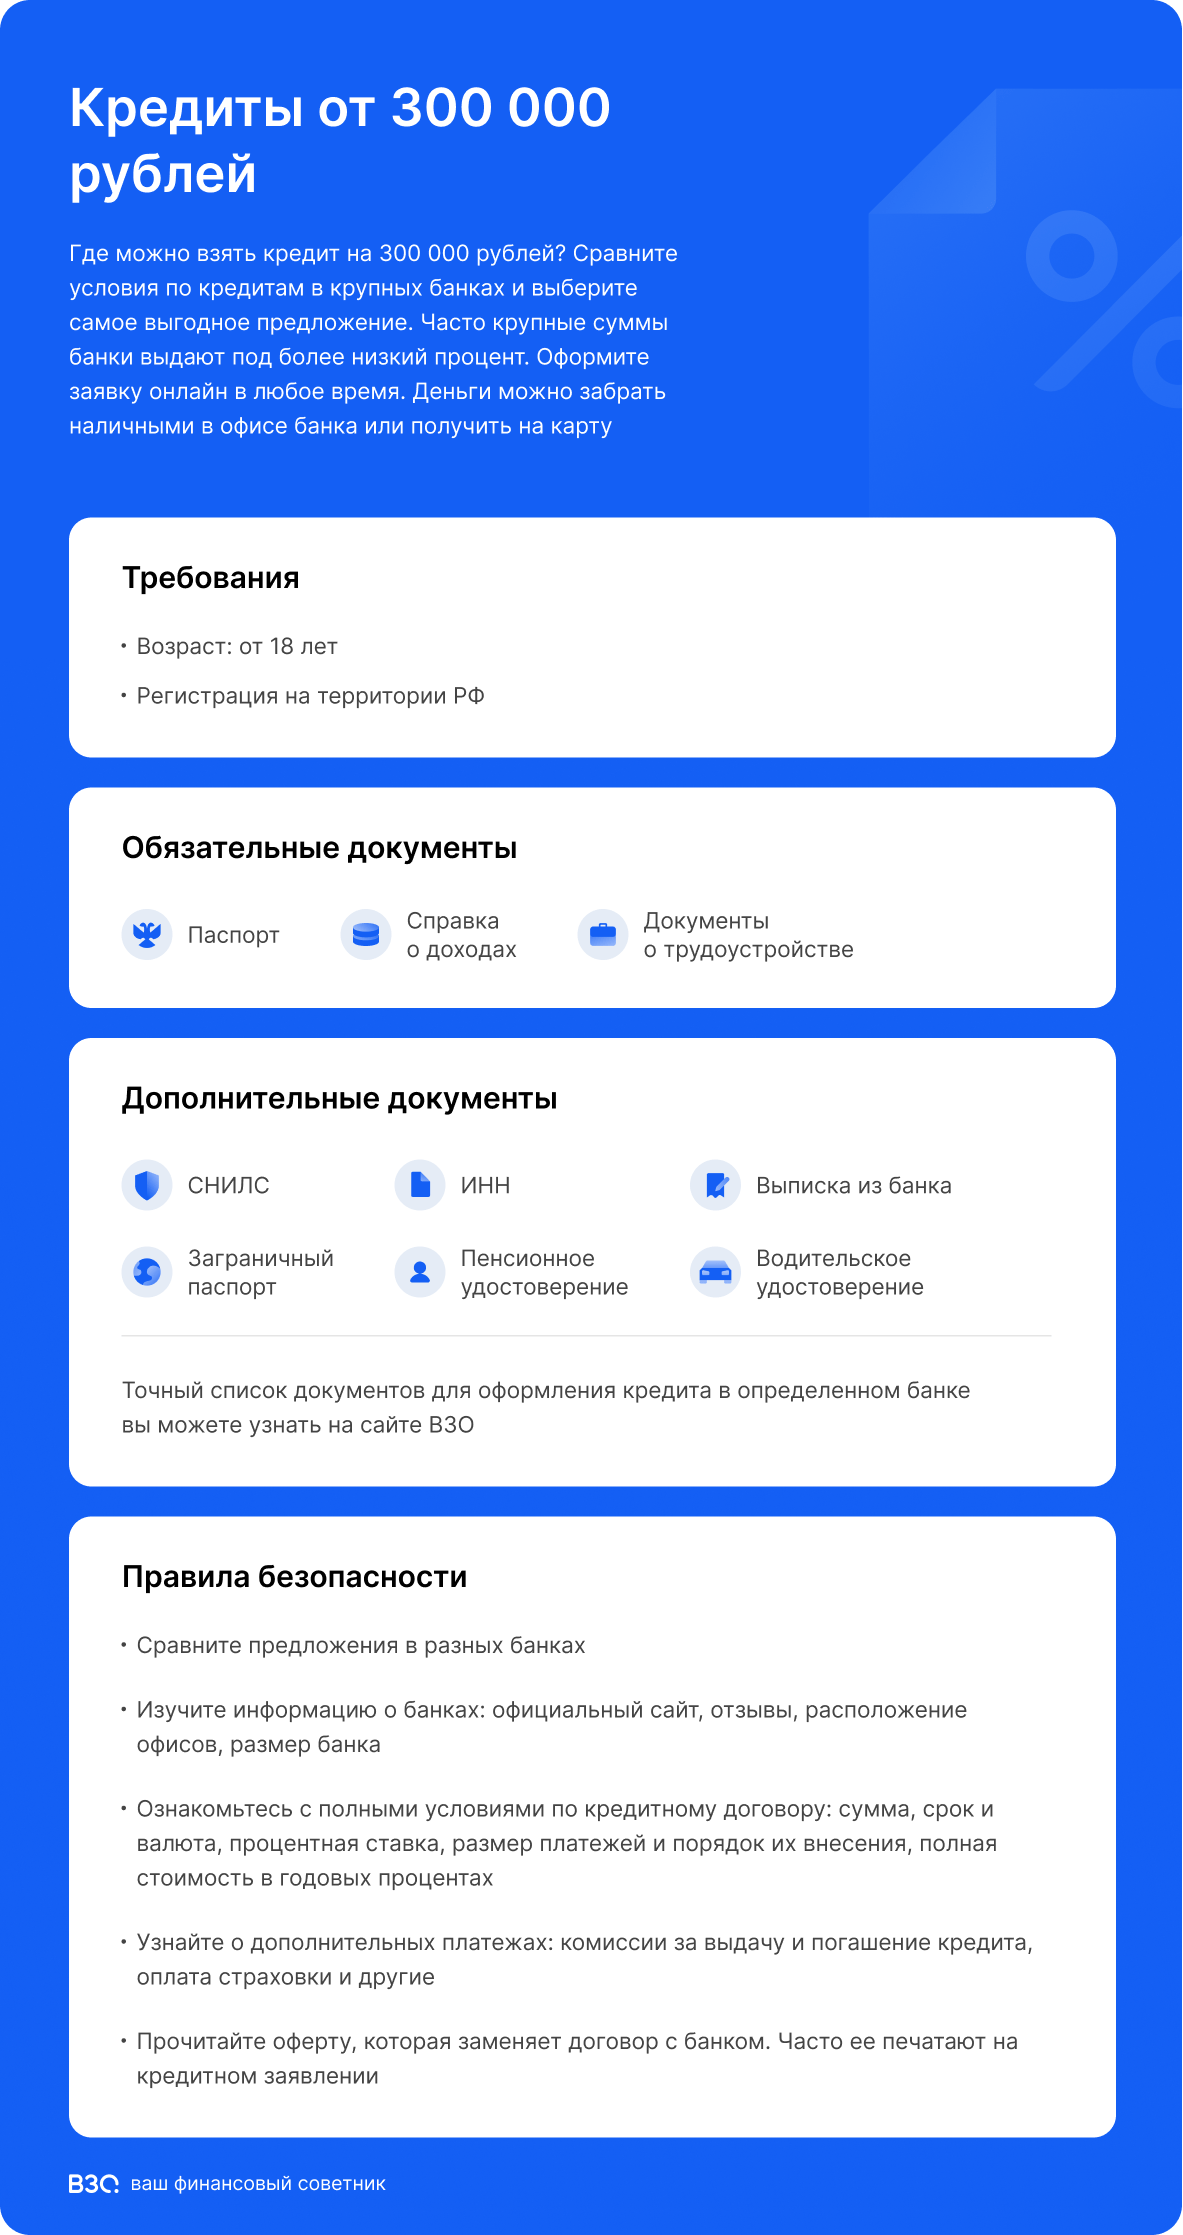 Инфографика кредиты онлайн от 300000 рублей